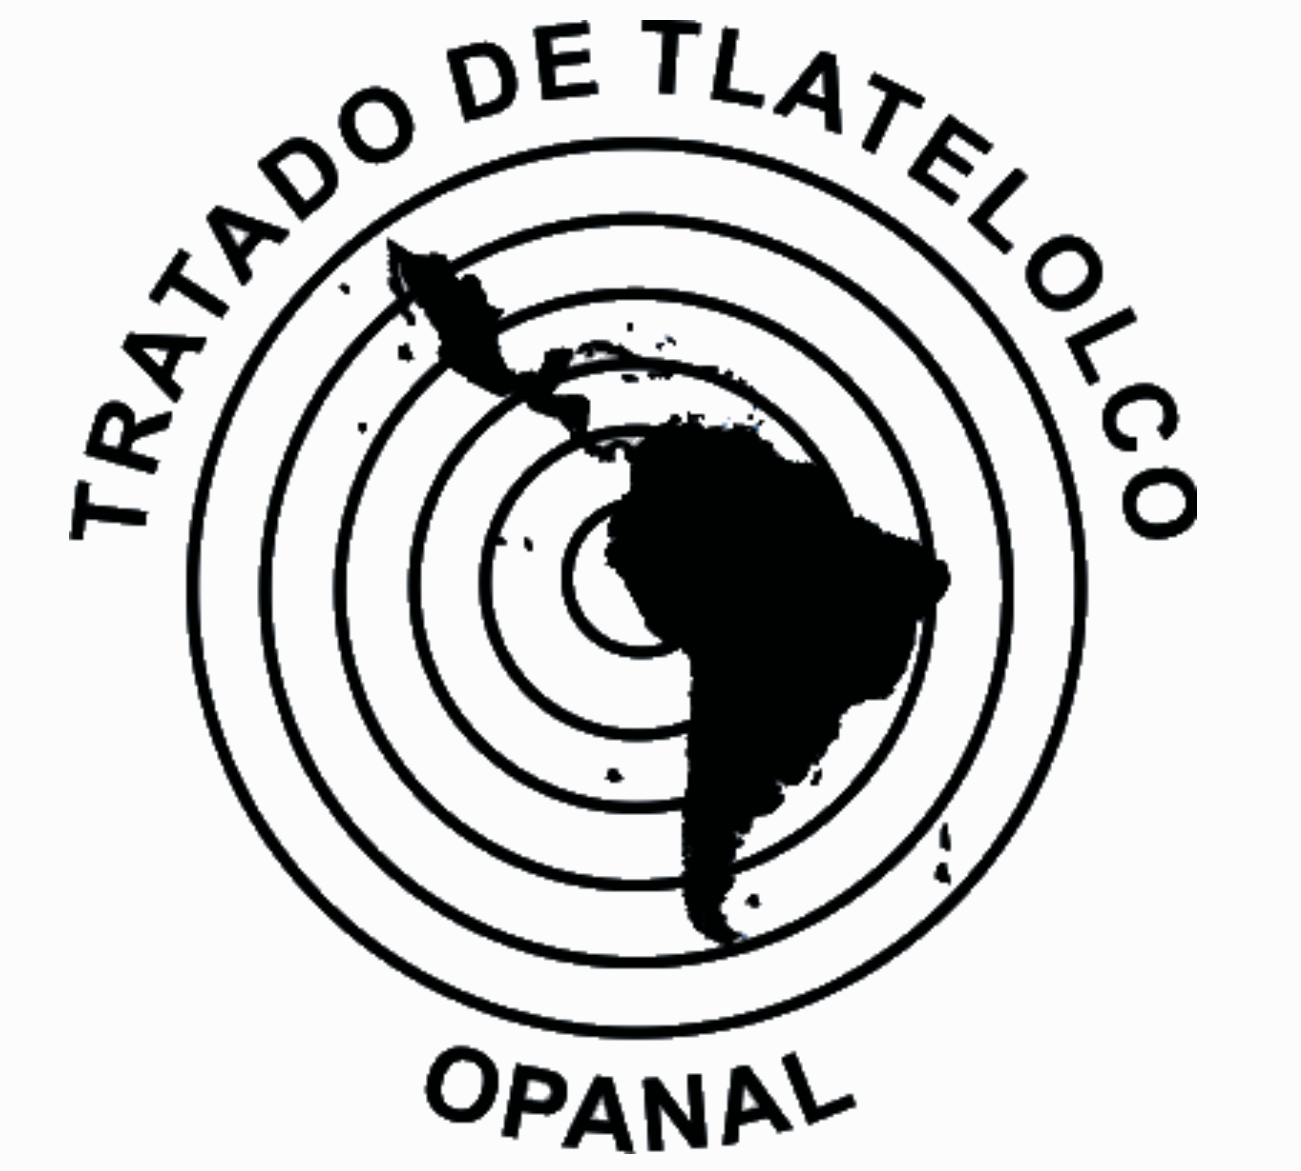 OPANAL logo. Source: http://www.opanal.org/quienes-somos/